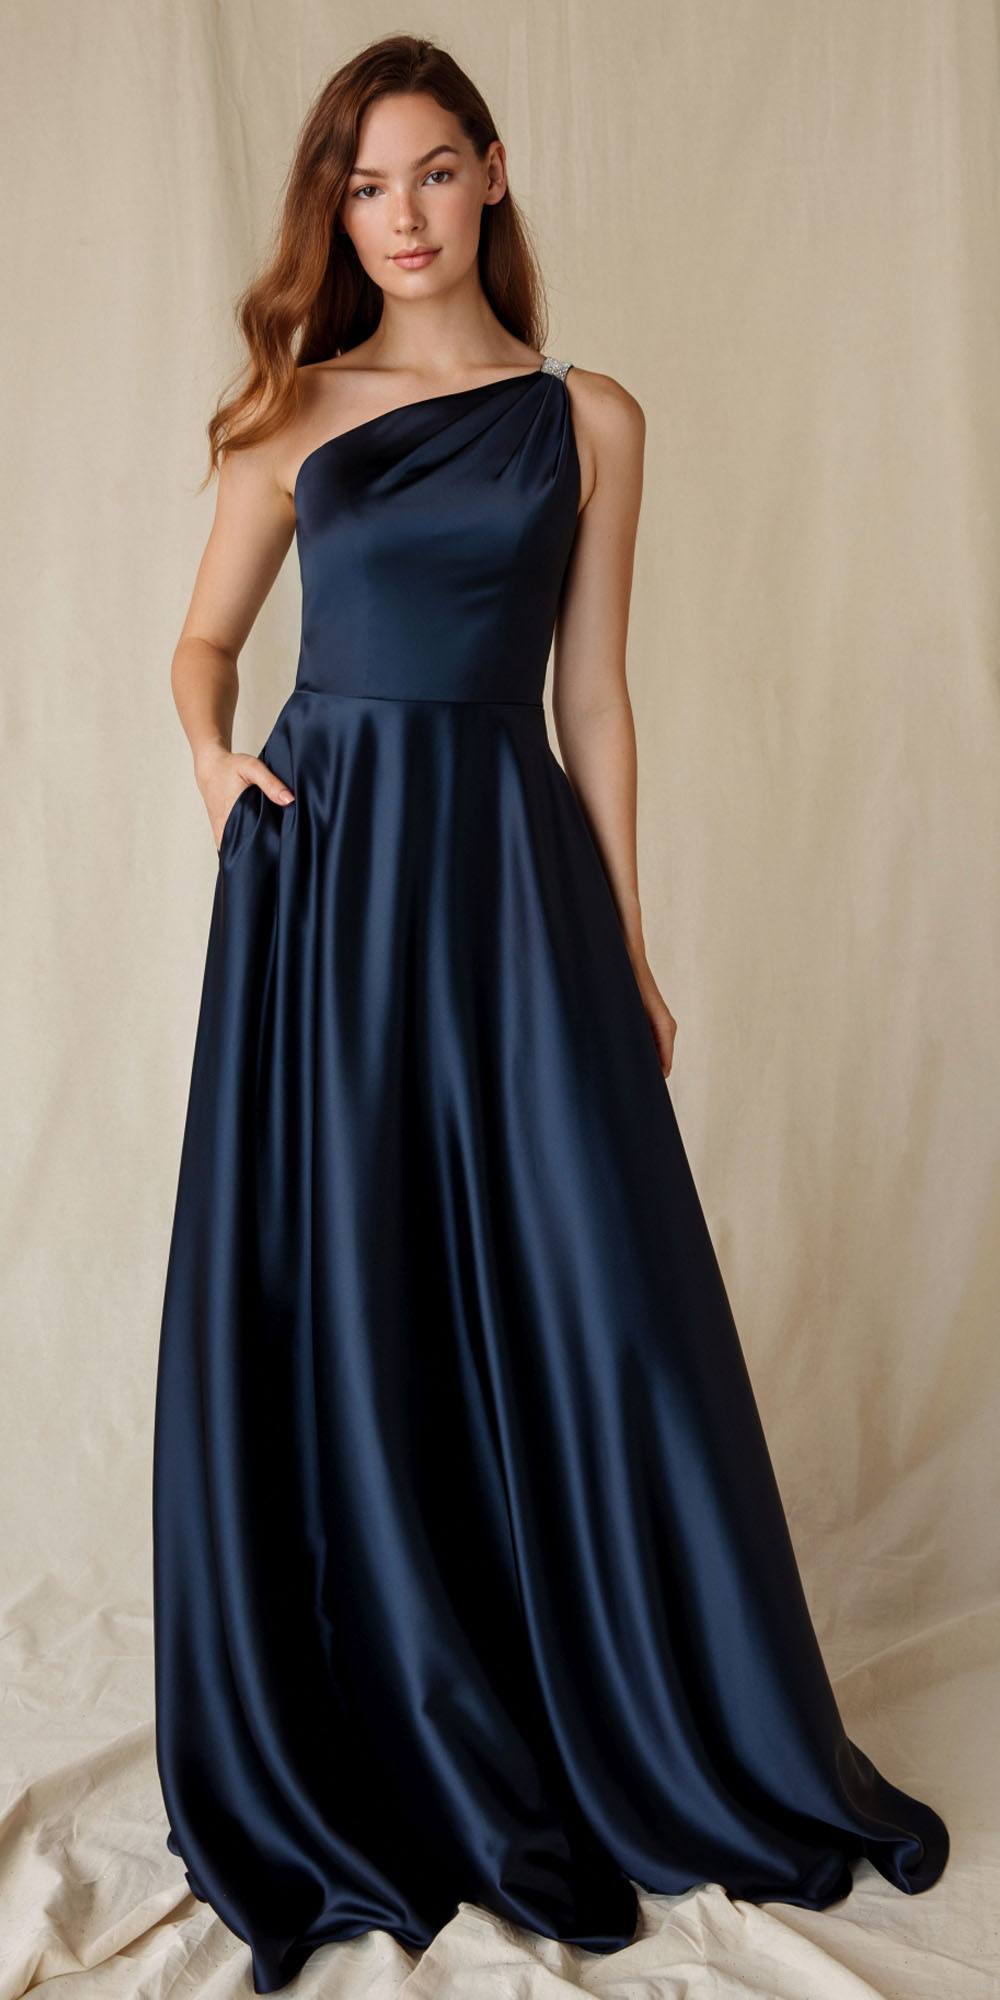 Eureka Fashion 9025 Dress